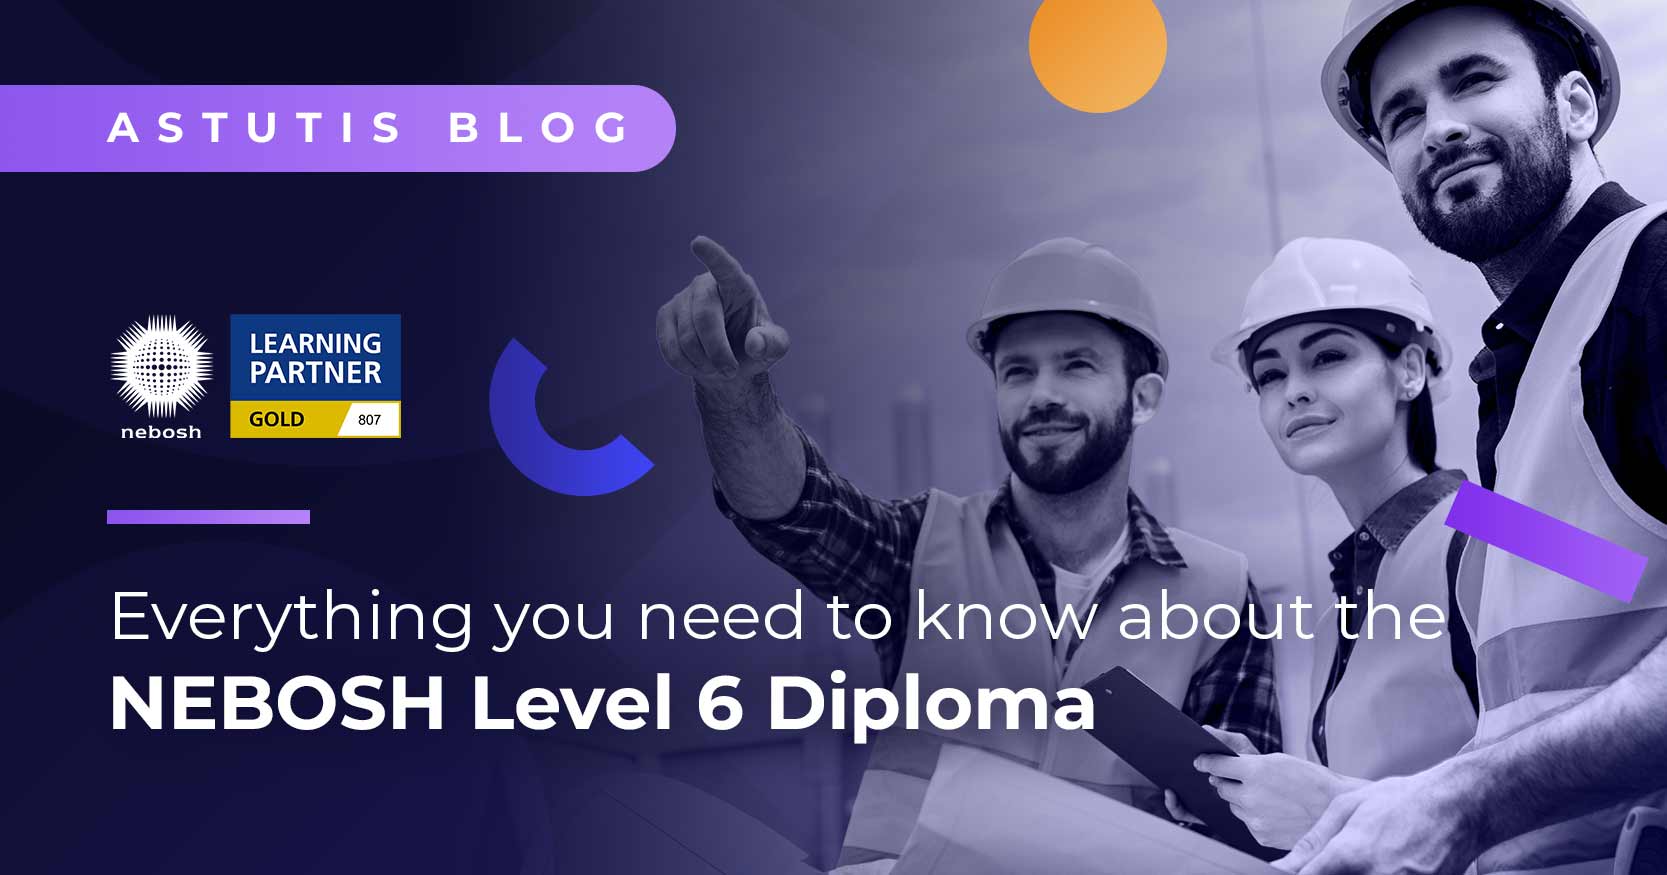 NEBOSH Level 6 Diploma | The Ultimate Astutis Guide Image